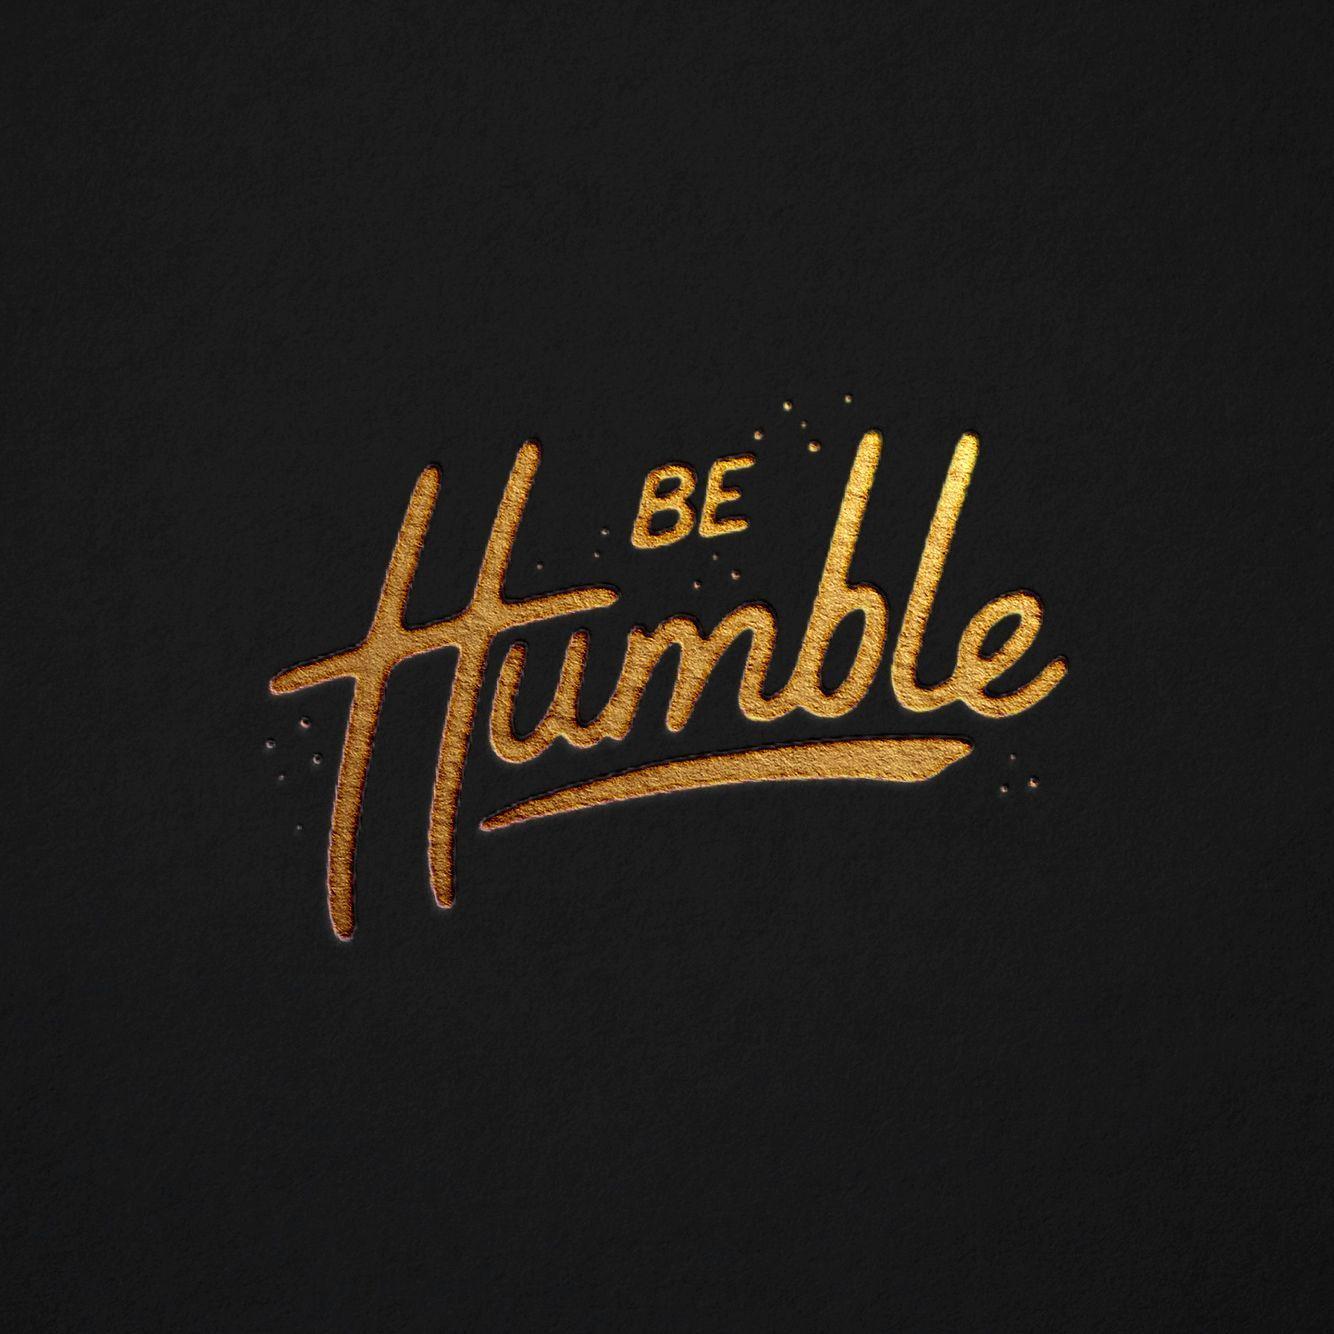 humble travel logo